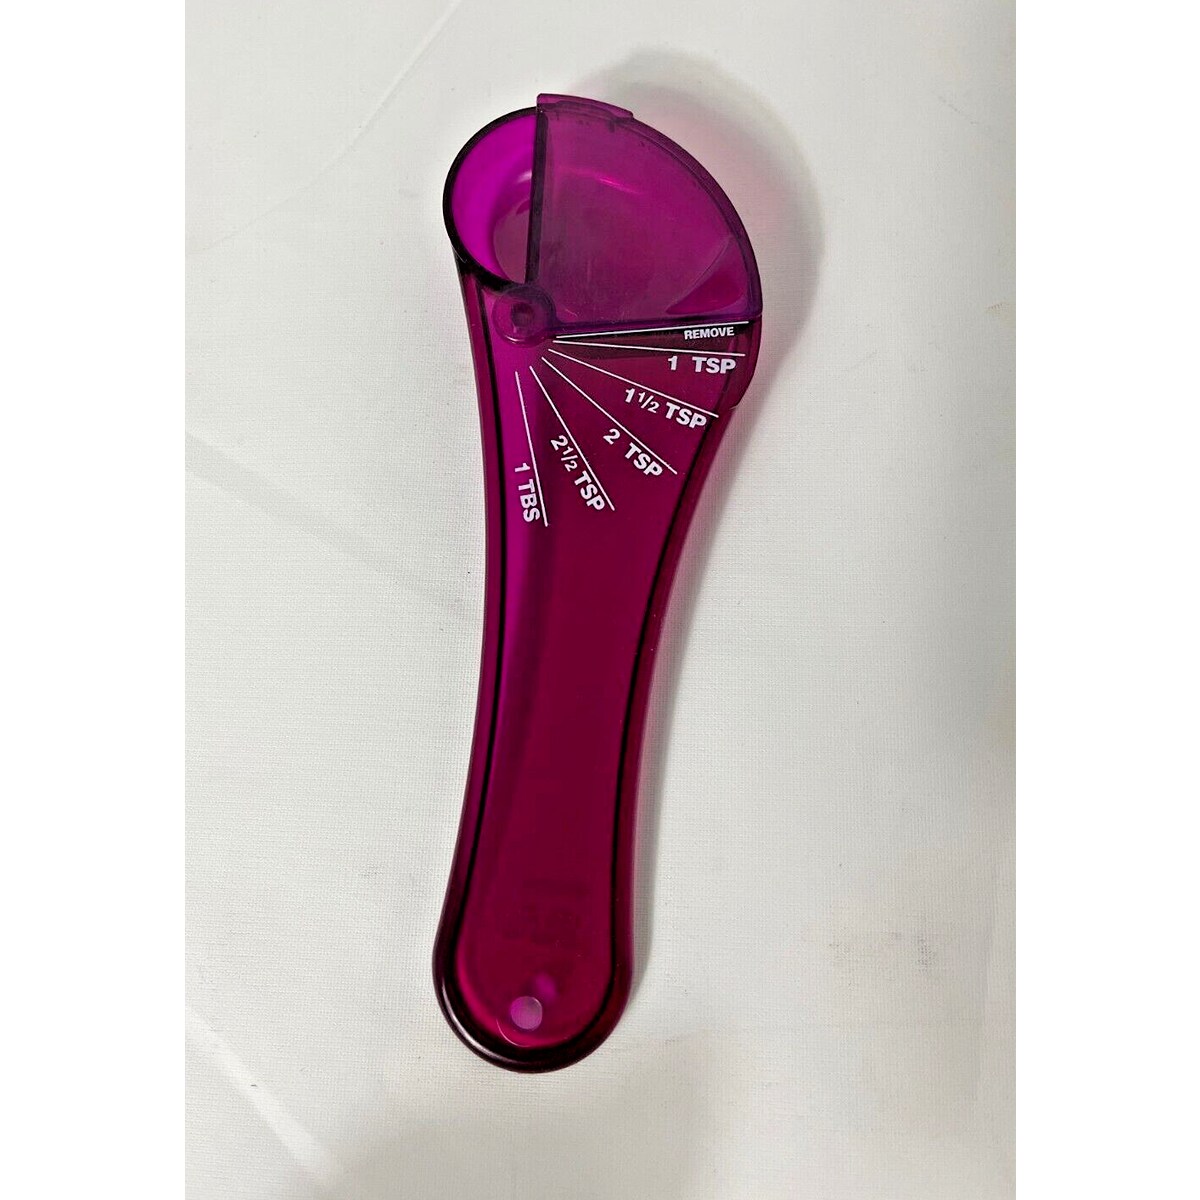 Adjustable measuring spoon - 1 Tsp to 2 Tbsp